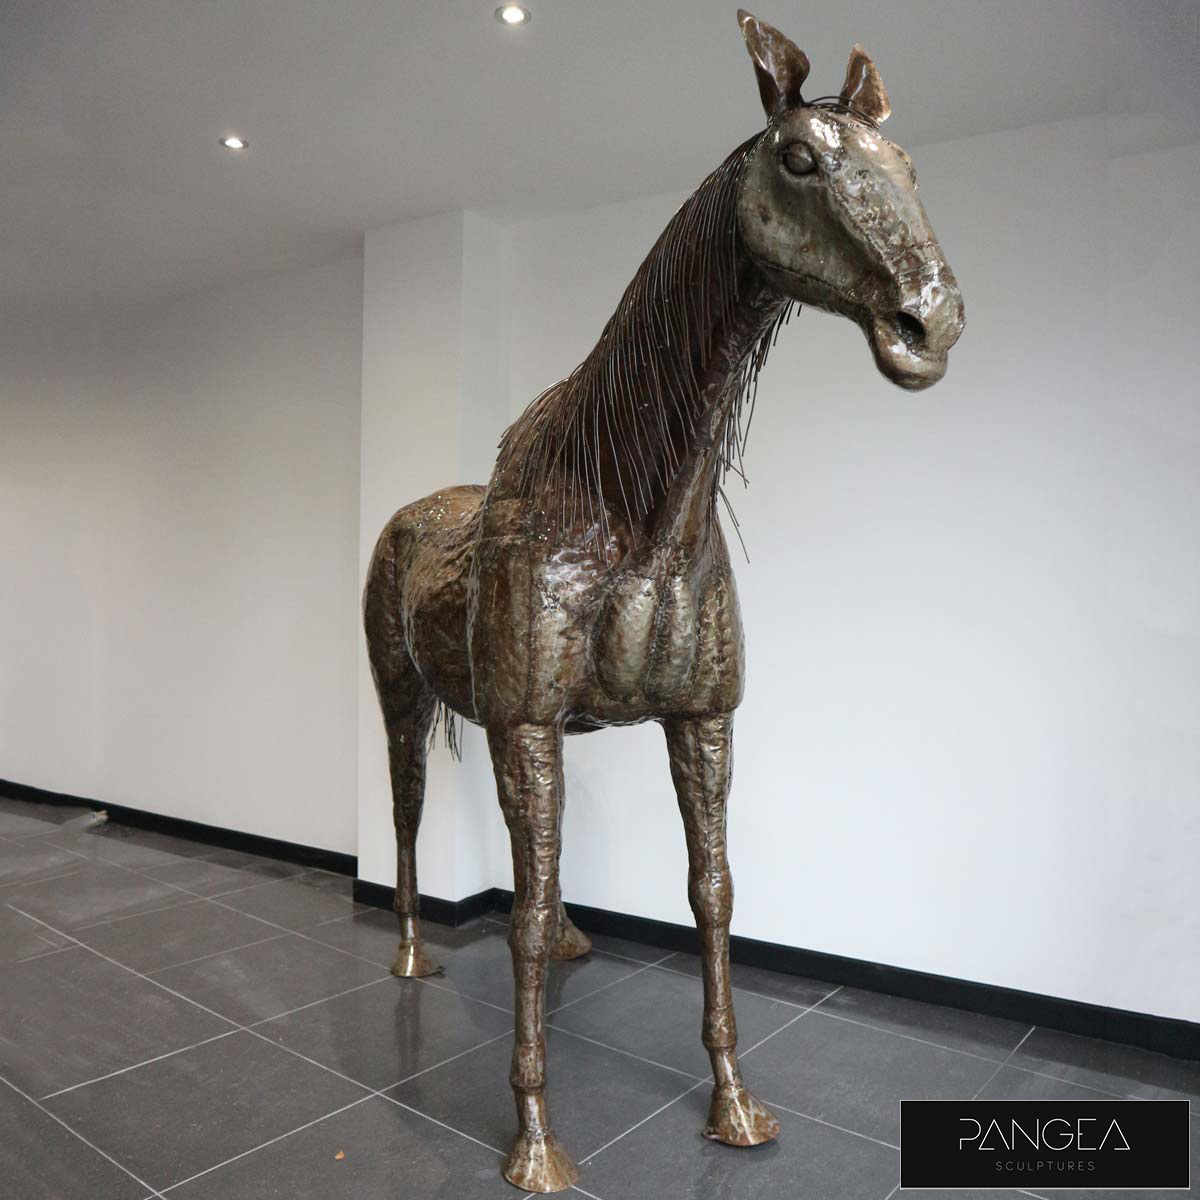 Pangea 6ft (182.9cm) Horse Ornamental Metal Structure - Life Size